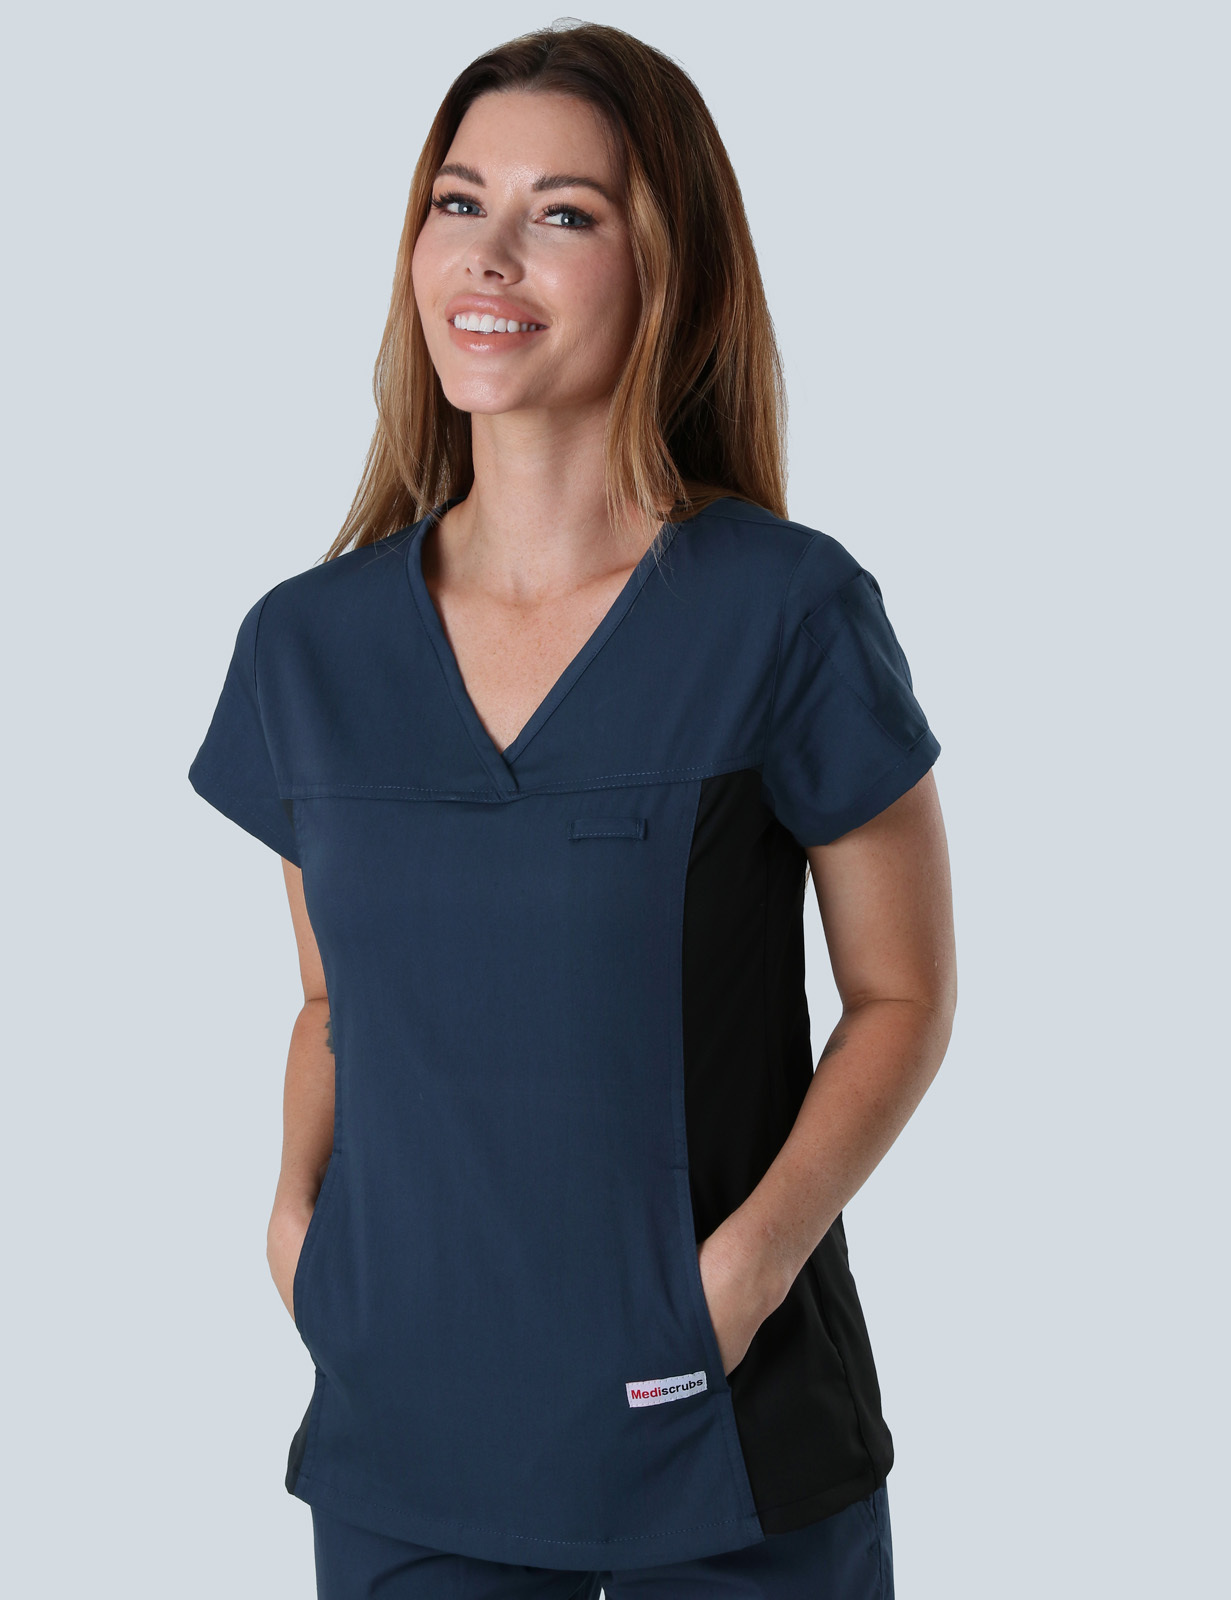 Monash Health Newborn Doctor Uniform Set Bundle (Women's Fit Spandex Top and Cargo Pants in Navy + Logo)